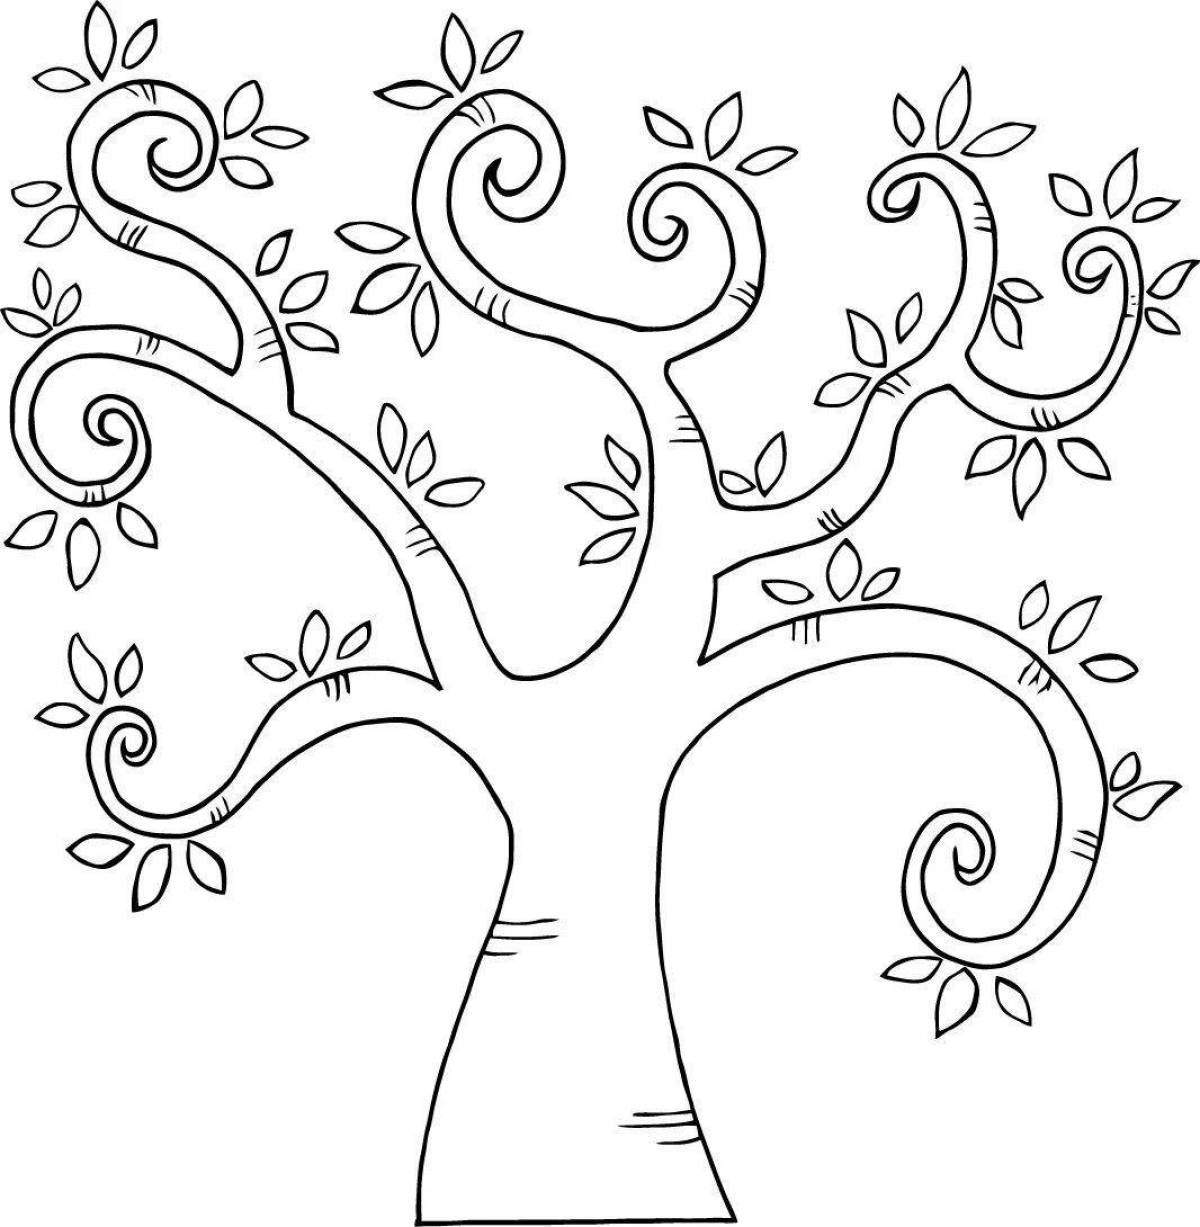 Generous fairy tree coloring book